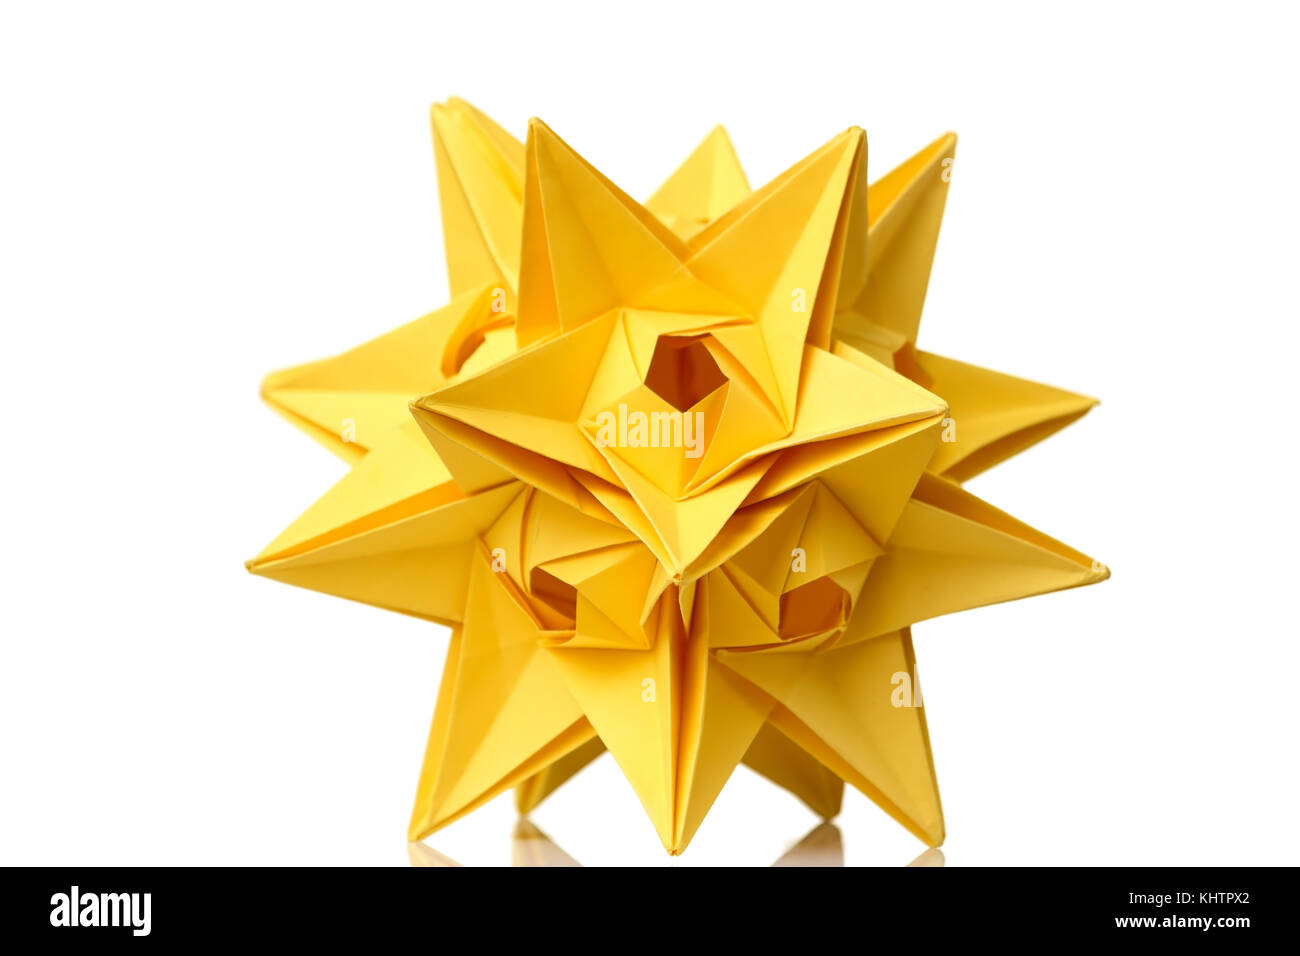 Yellow star origami figurine Stock Photo